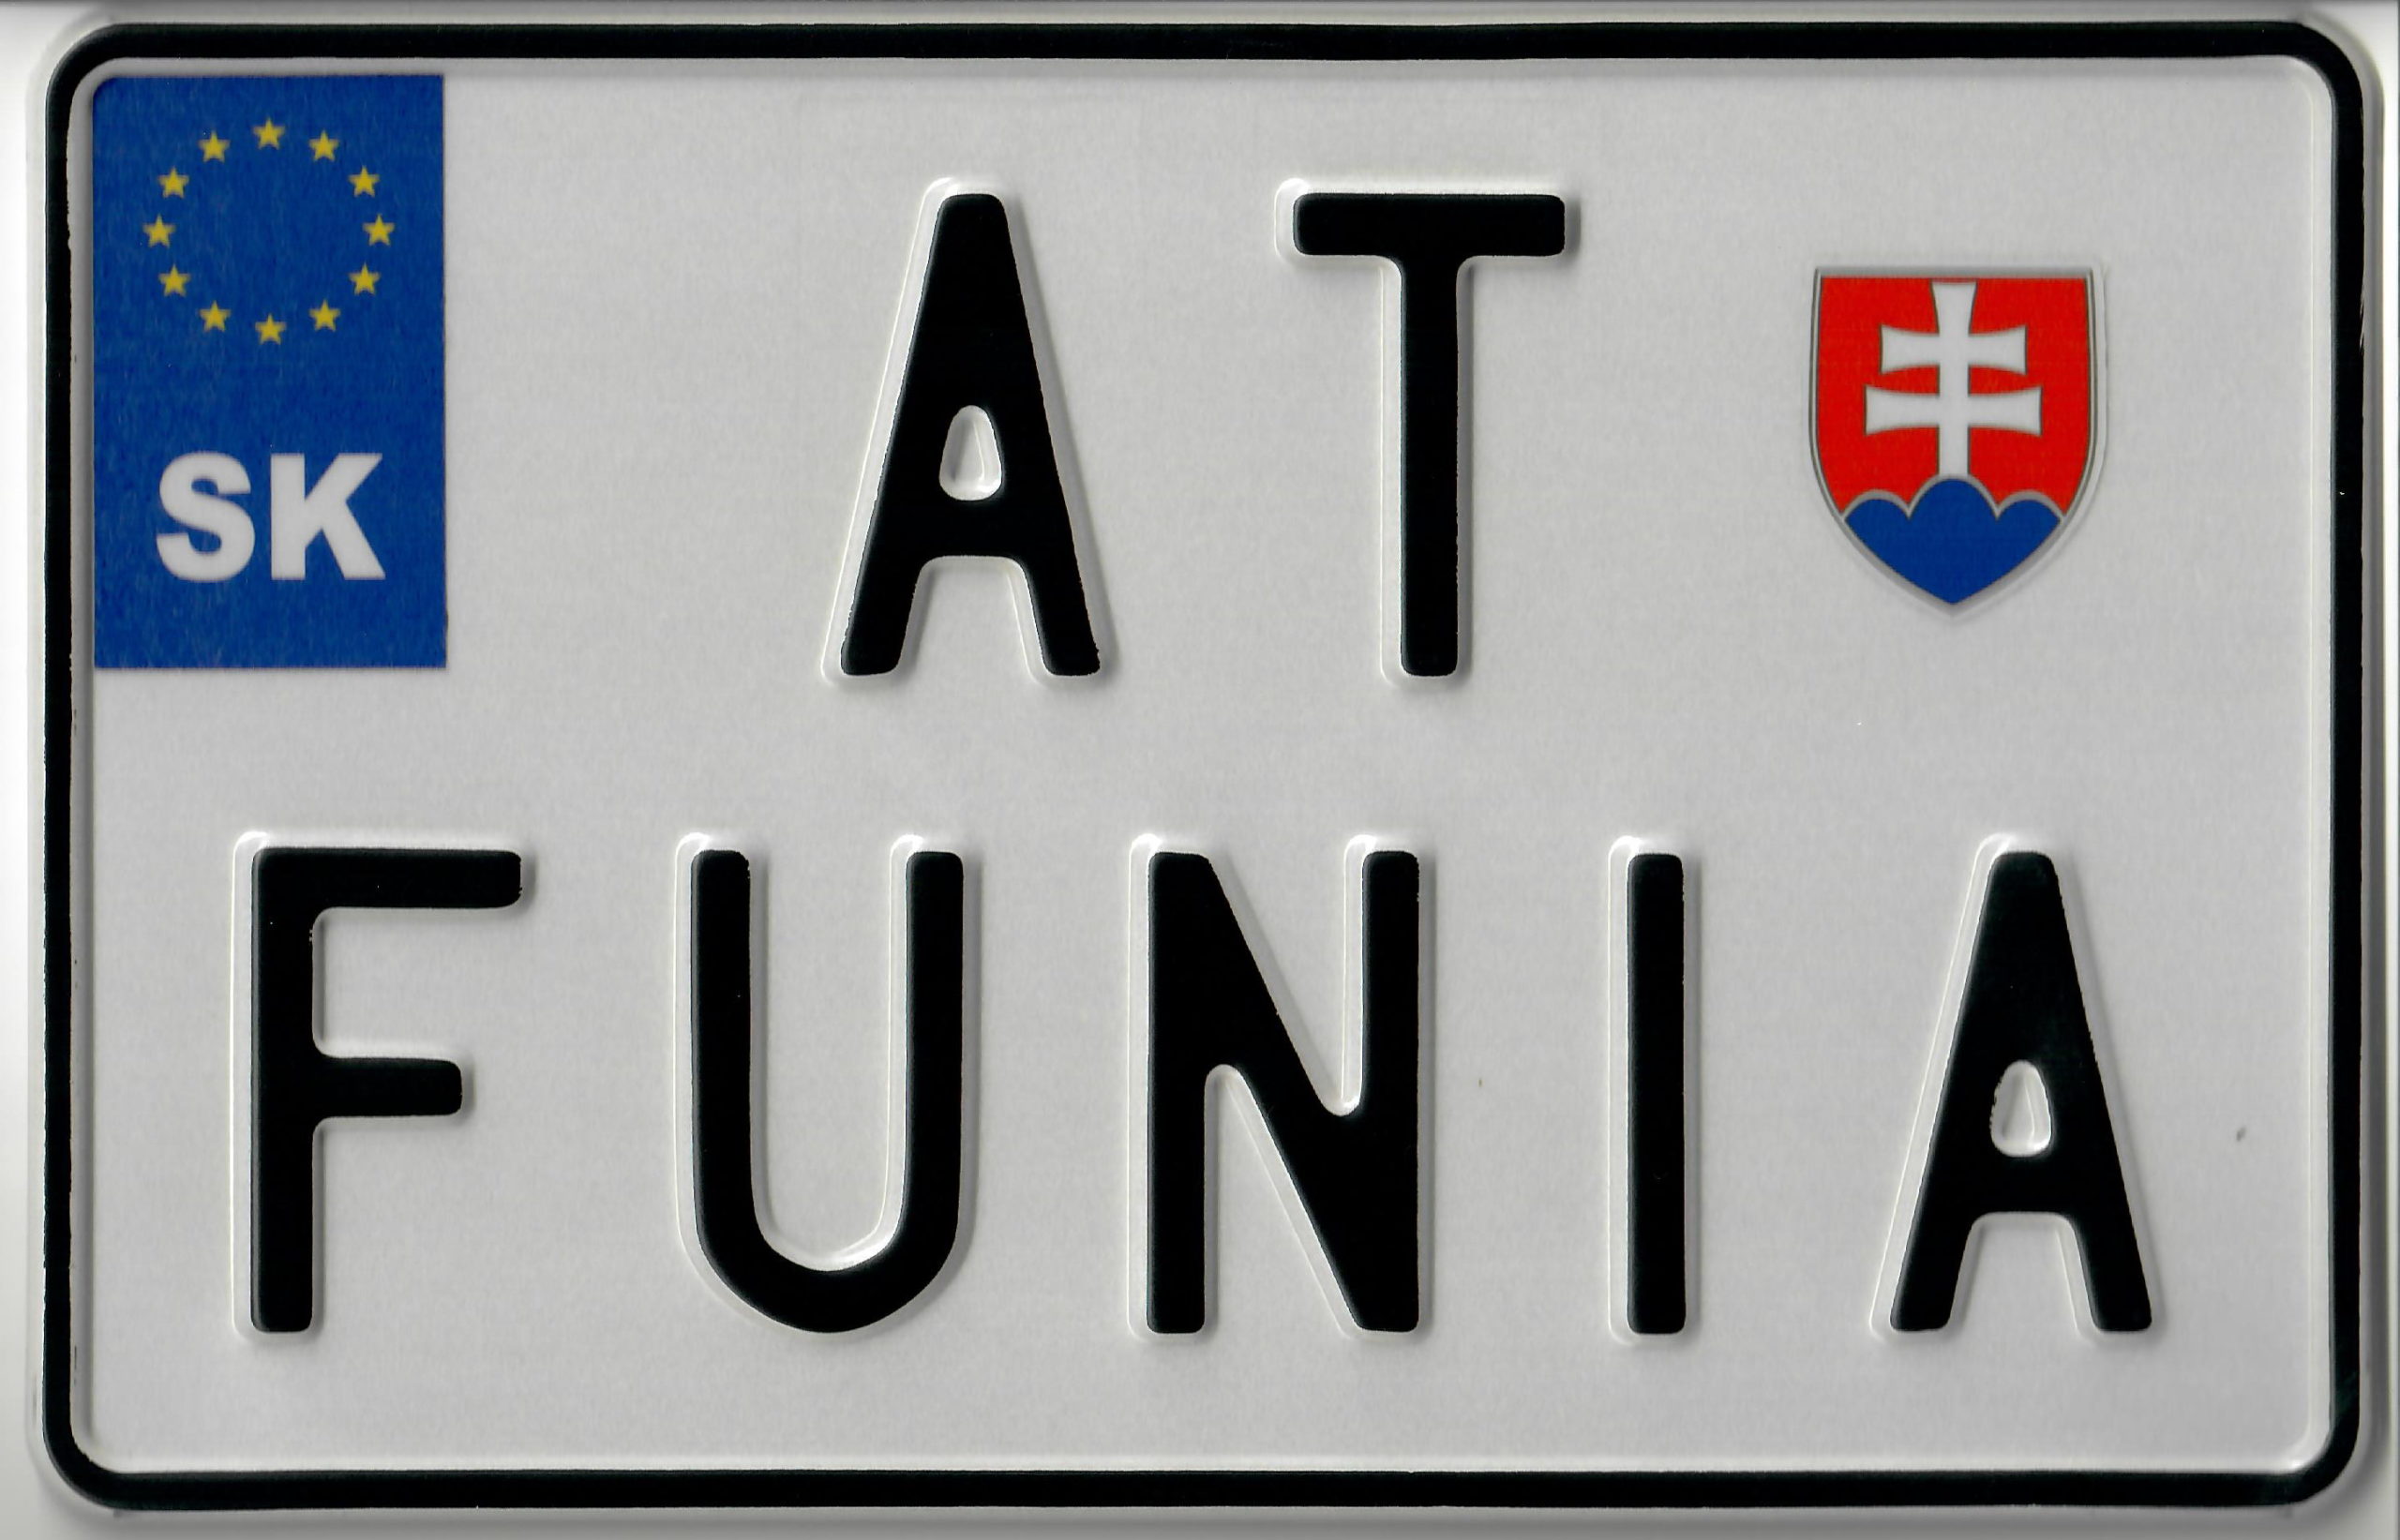 autofunia license plate